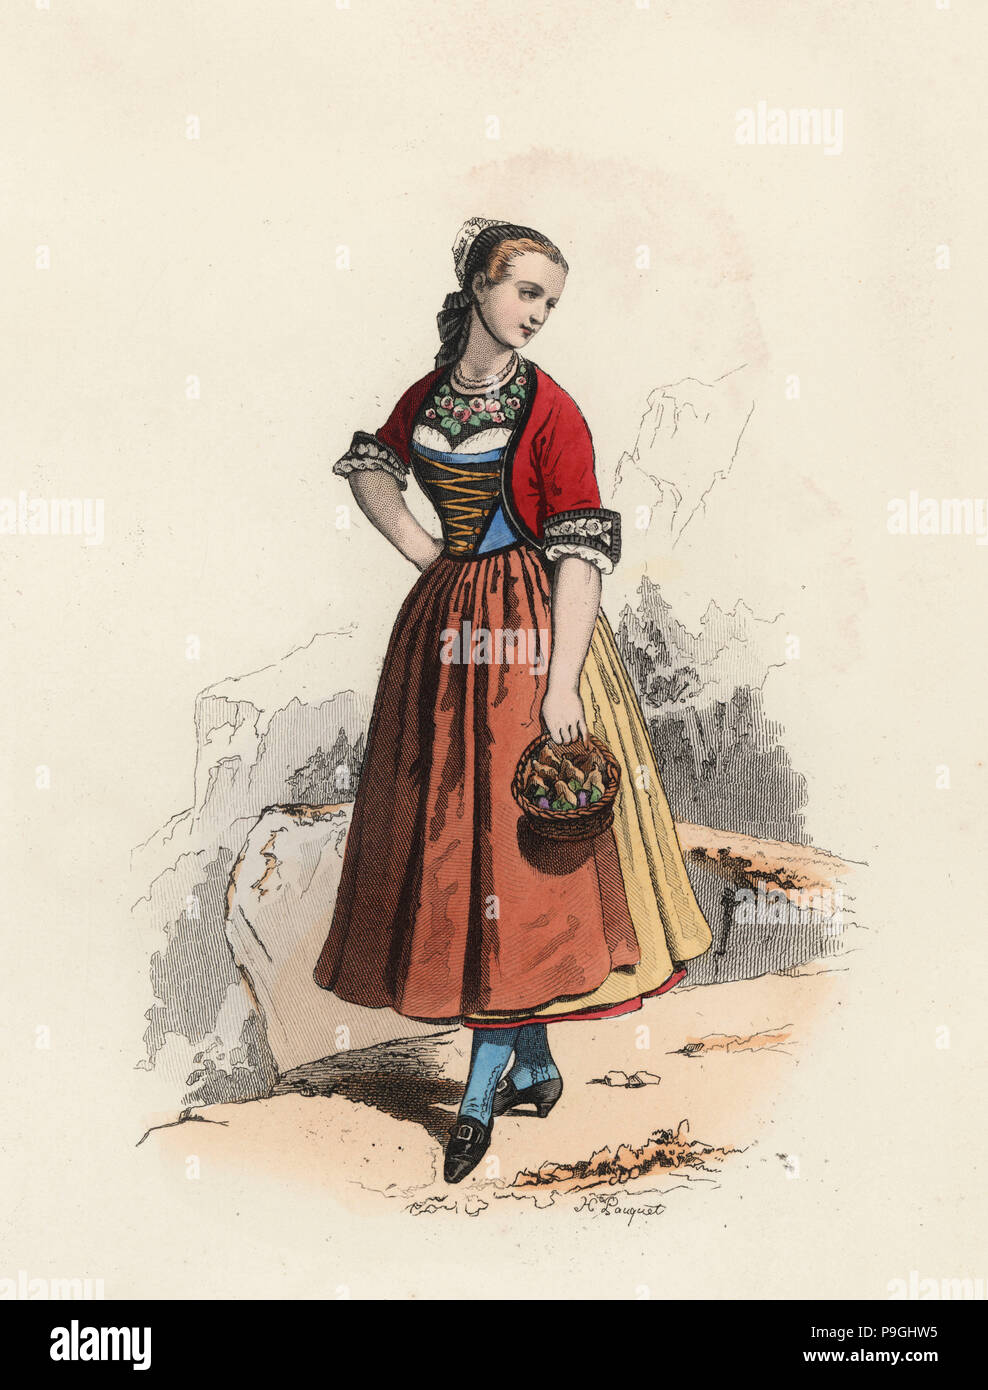 Junge Frau im Kanton Thurgovie (Schweiz), Farbe Gravur 1870 Stockfotografie  - Alamy